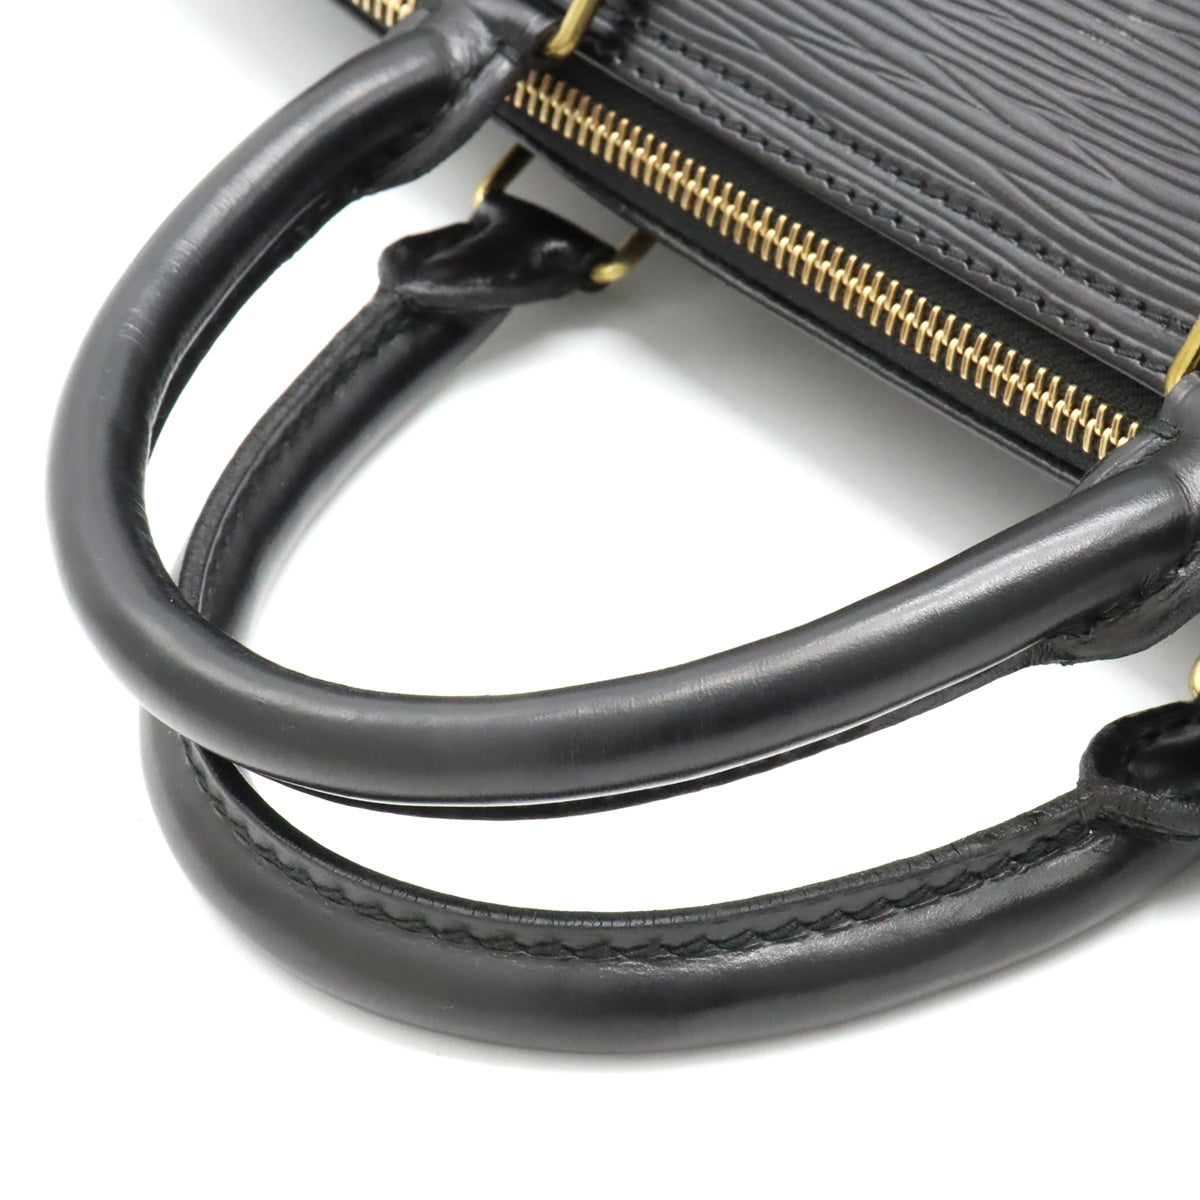 Louis Vuitton Louis Vuitton Epi Speedy 35 手提包 New Black Black M42992